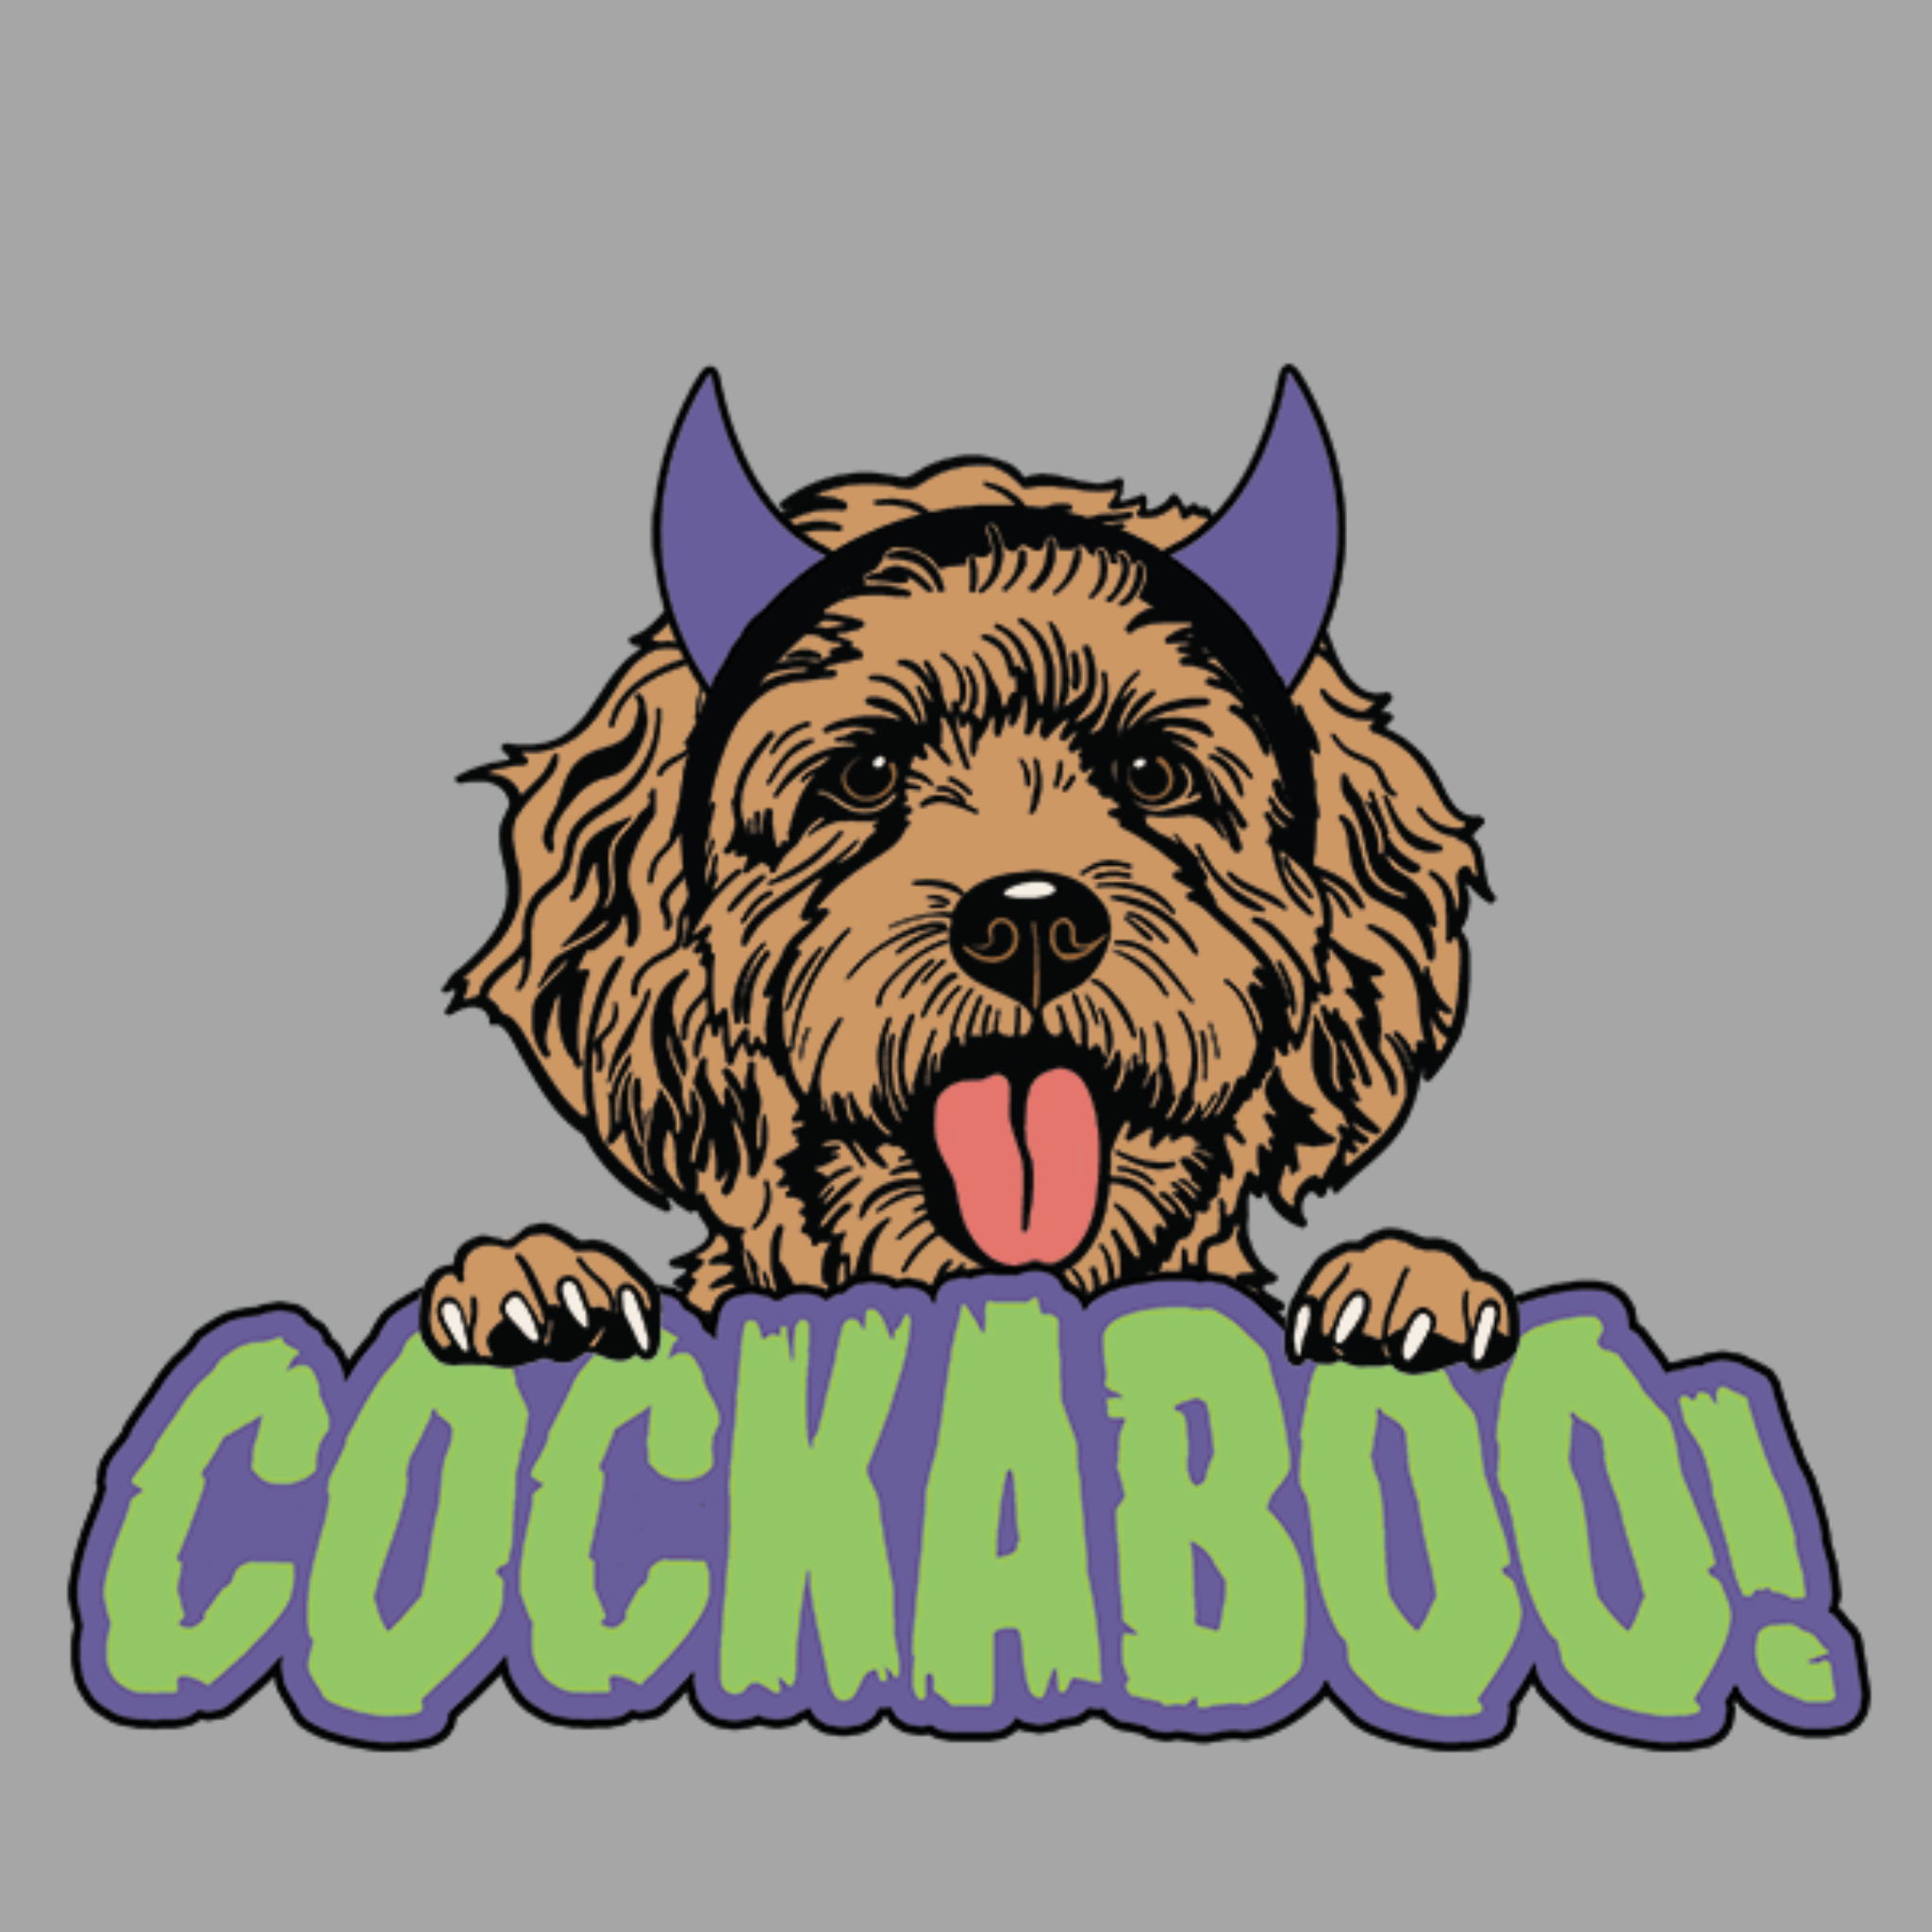 Cockaboo T Shirt